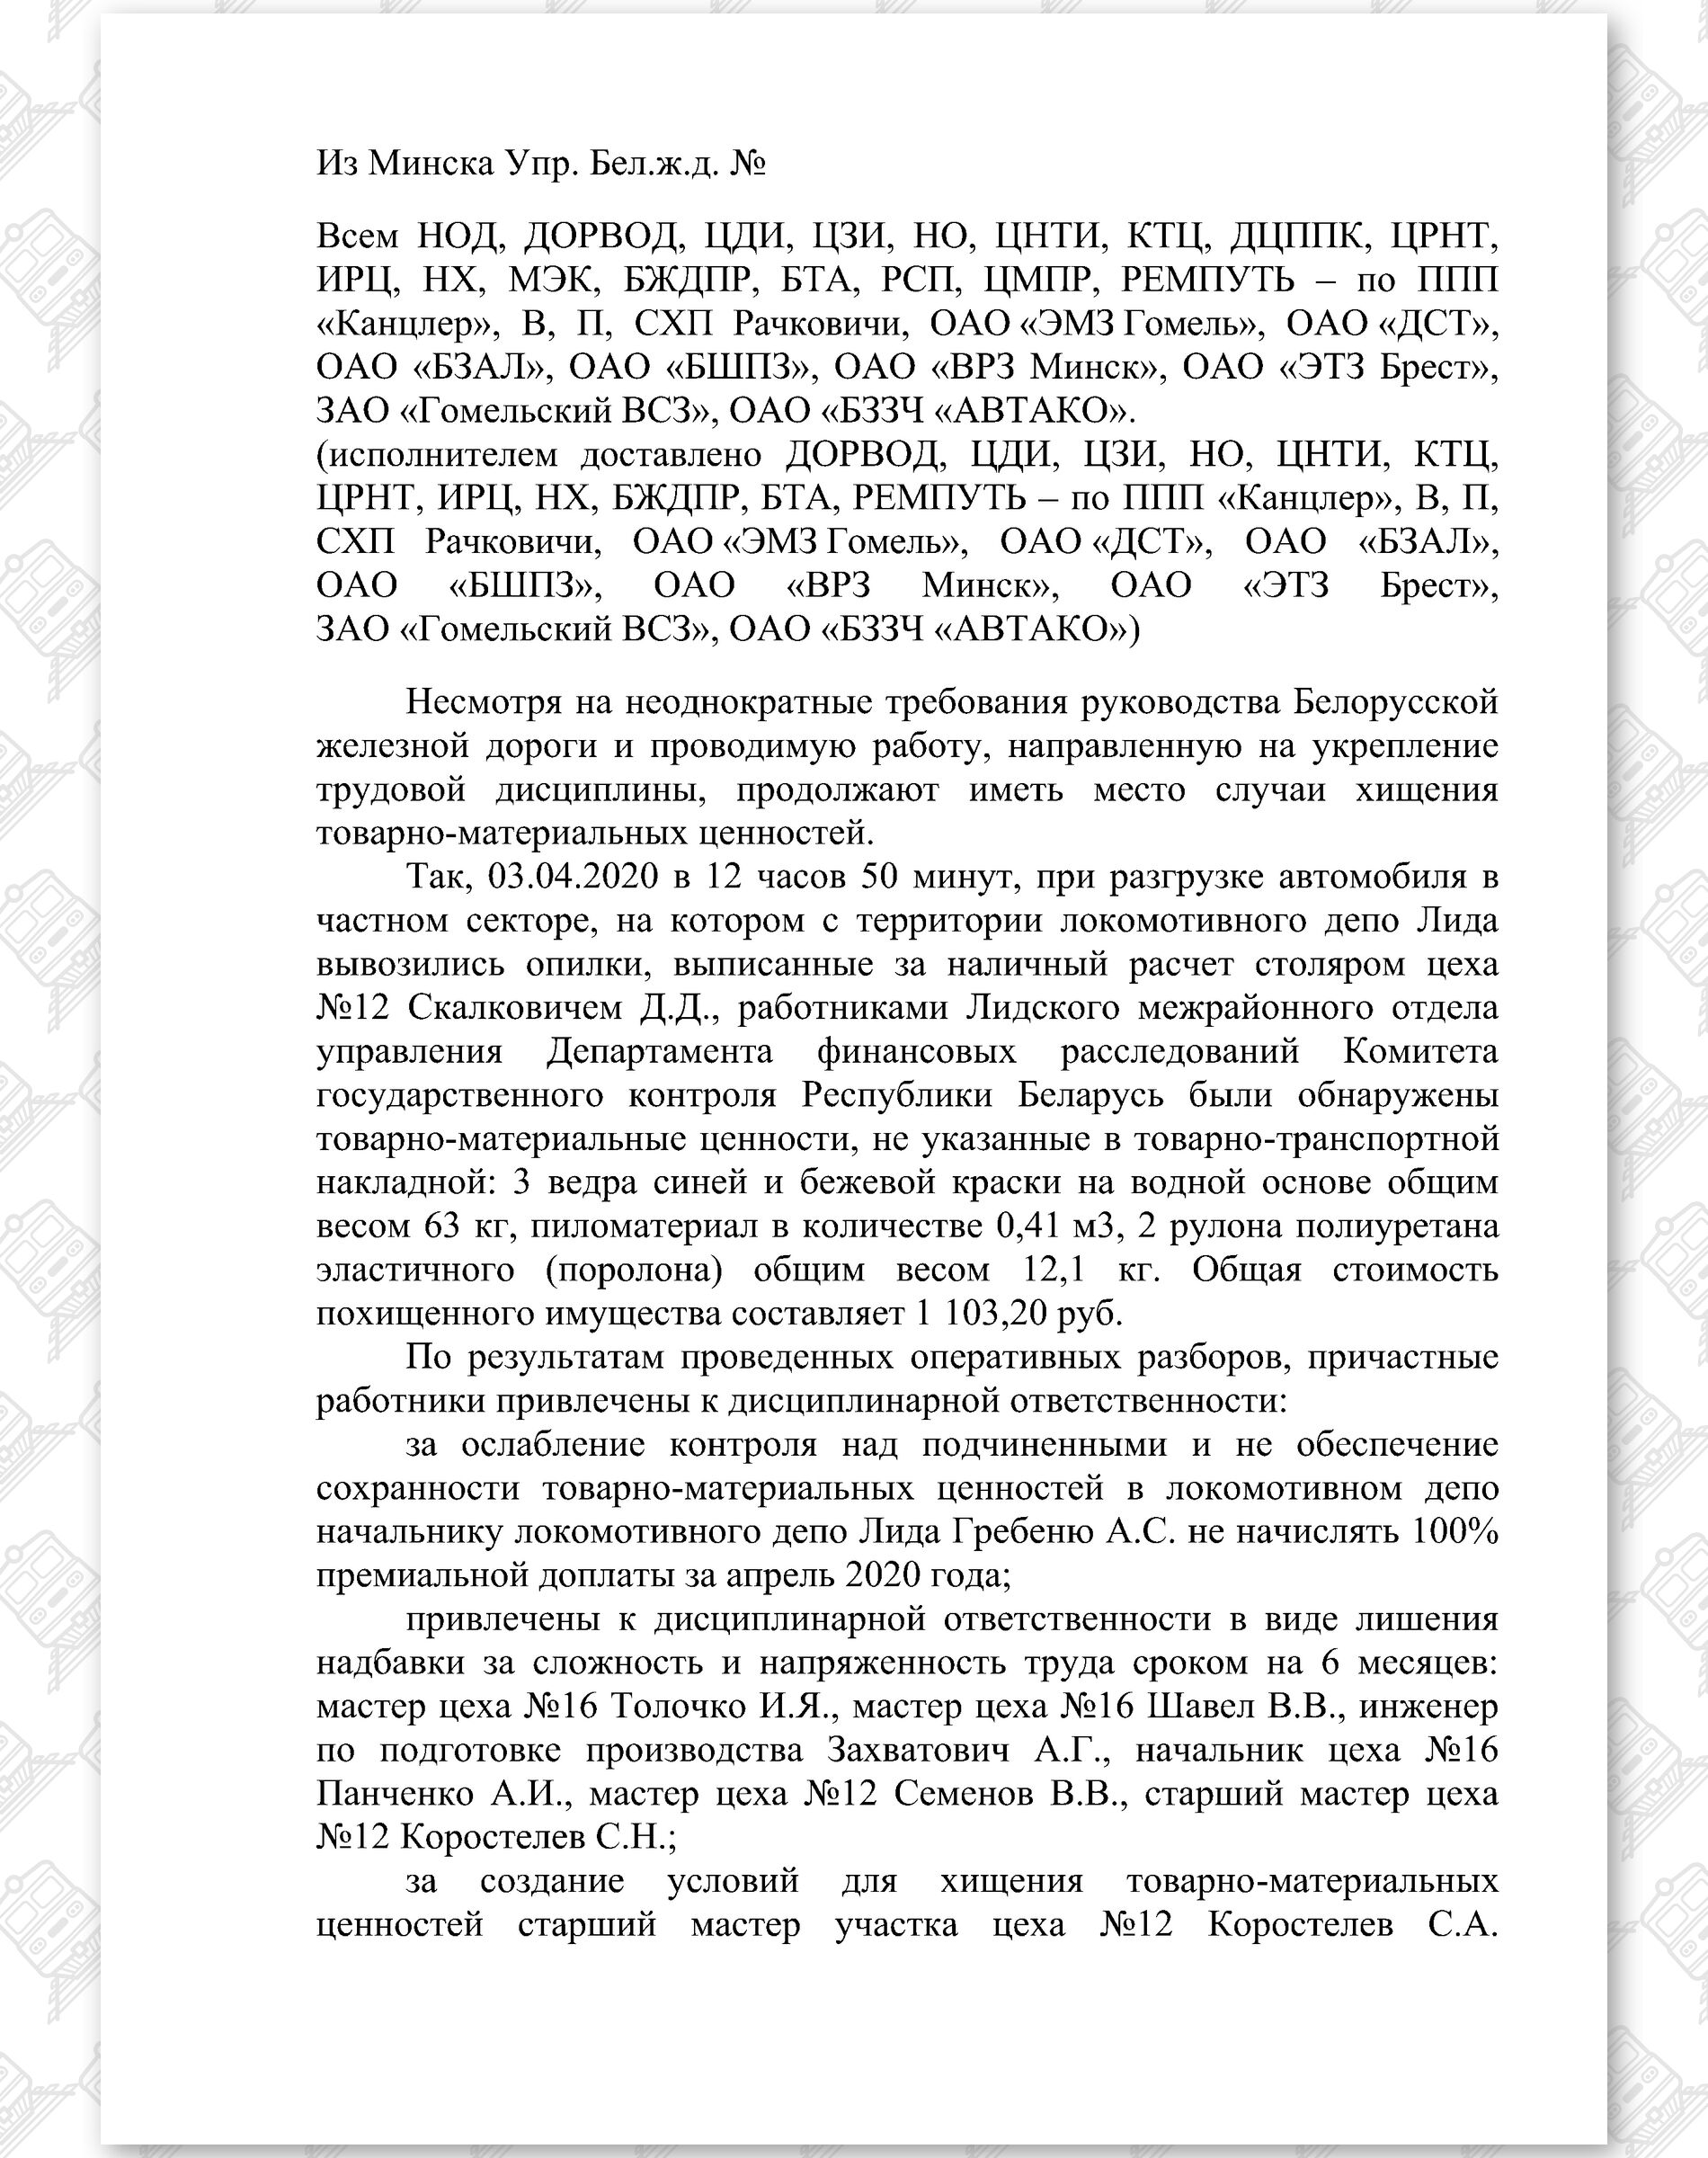 Телеграмма от 17.04.2020 службы локомотивного хозяйства (Страница 1)